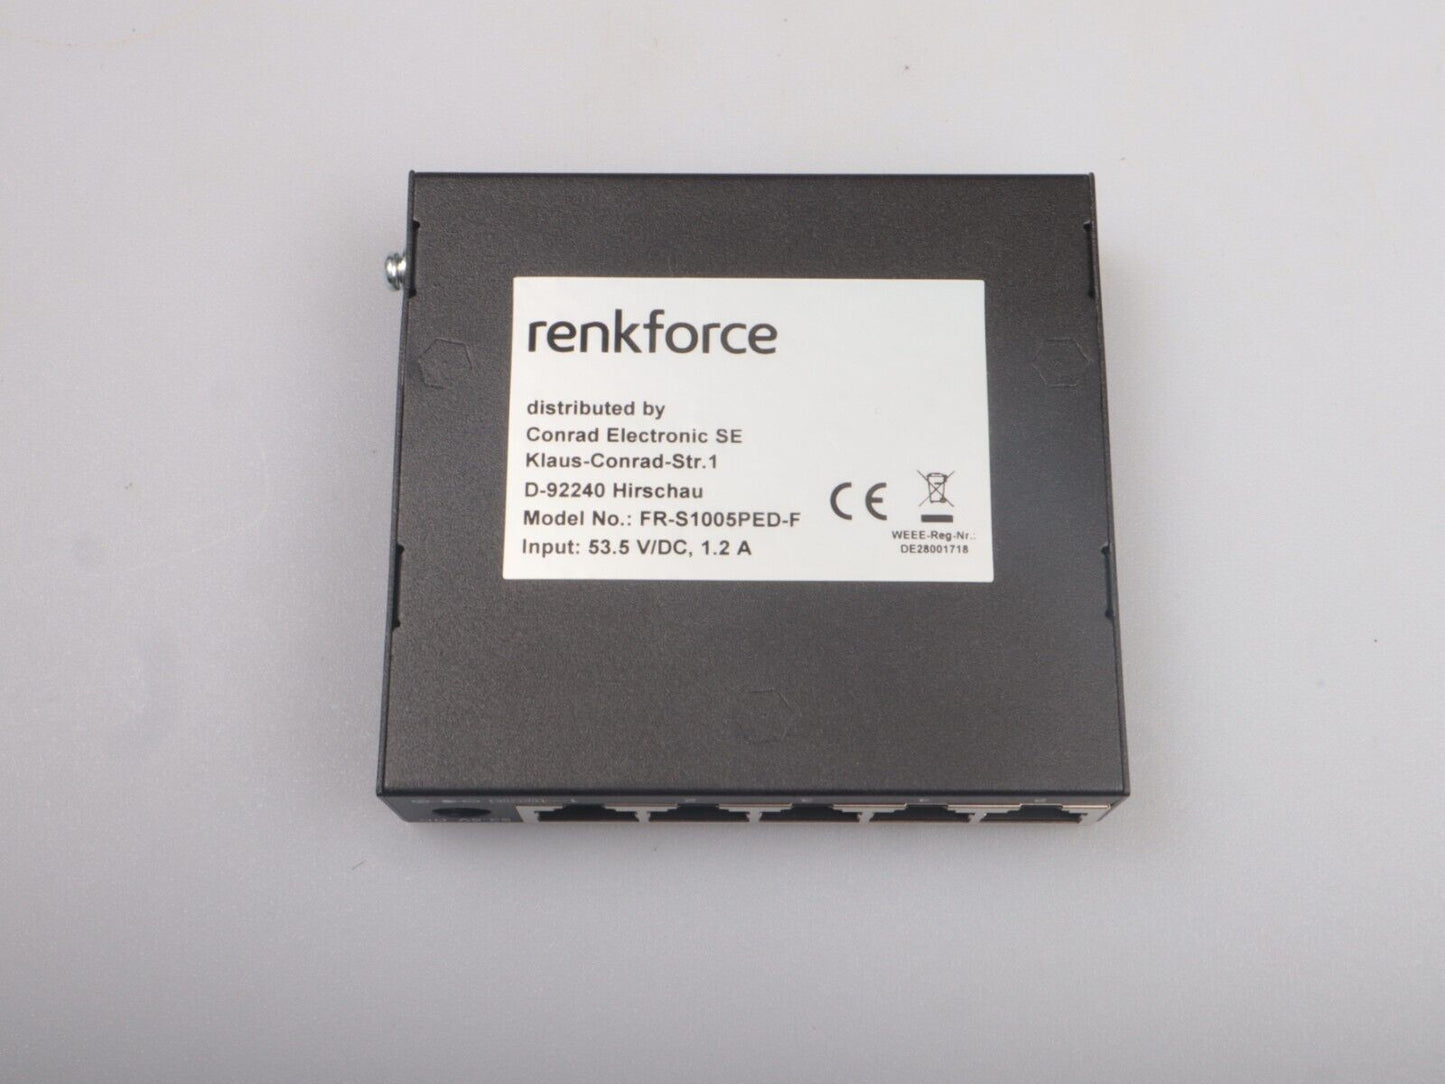 RENKFORCE 5-Port 10/100 MBIT/S Unmanaged Netwerk Switch POE Function